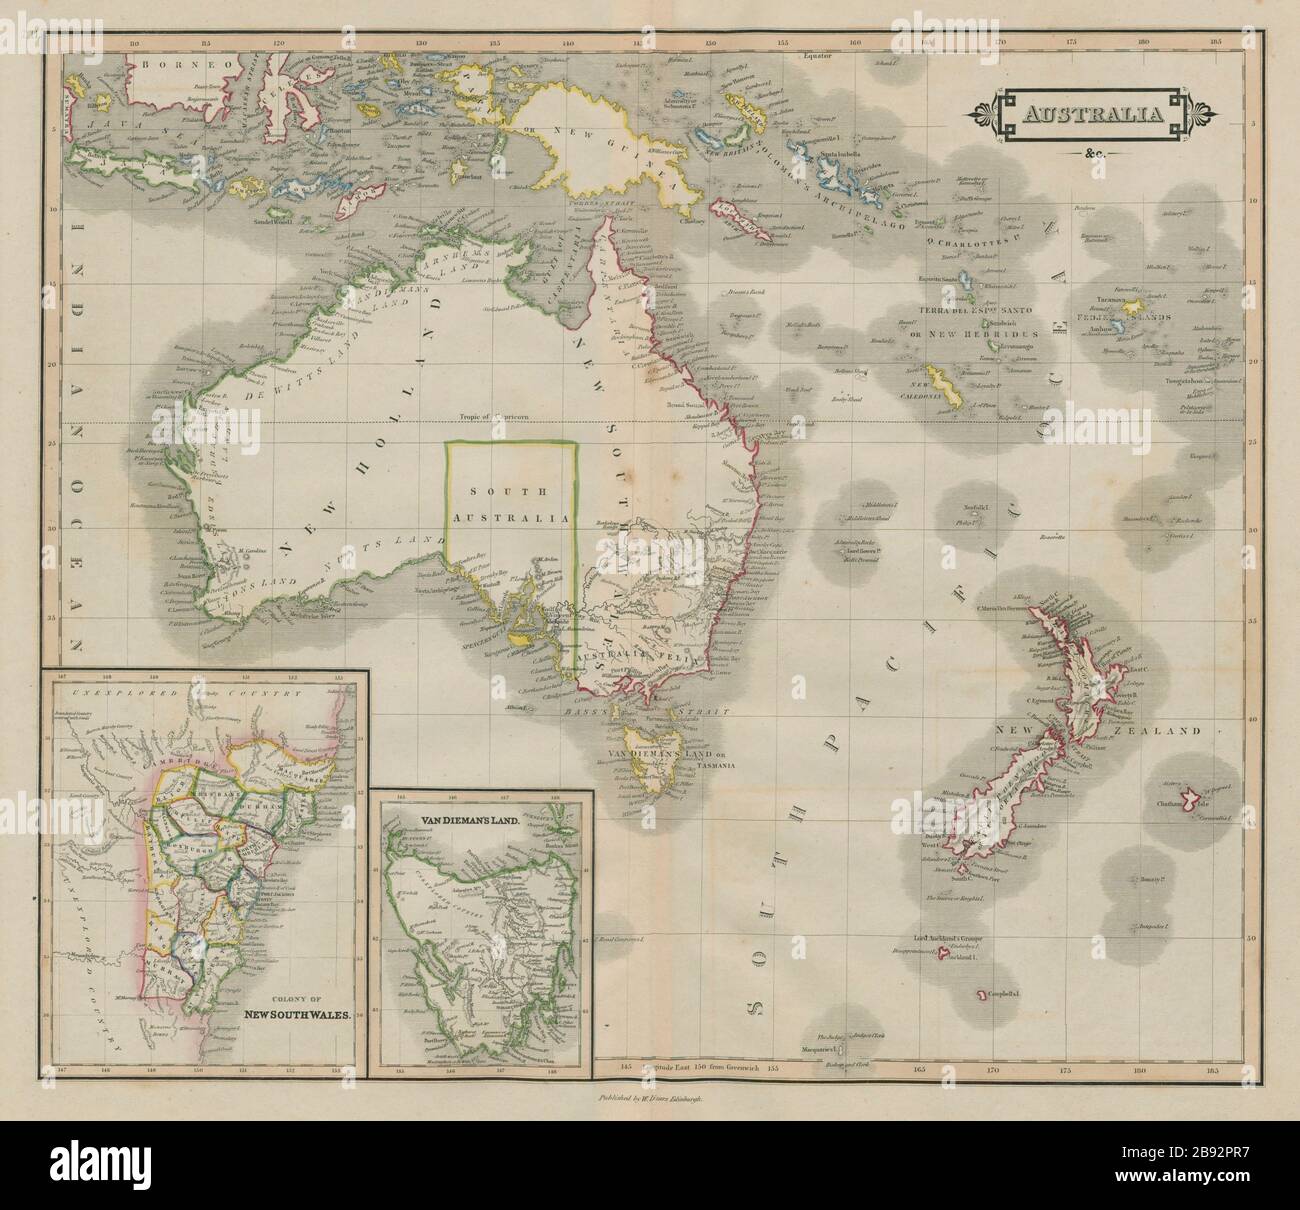 Australia Felix. New South Wales. Van Dieman's Land. New Holland LIZARS 1842 map Stock Photo